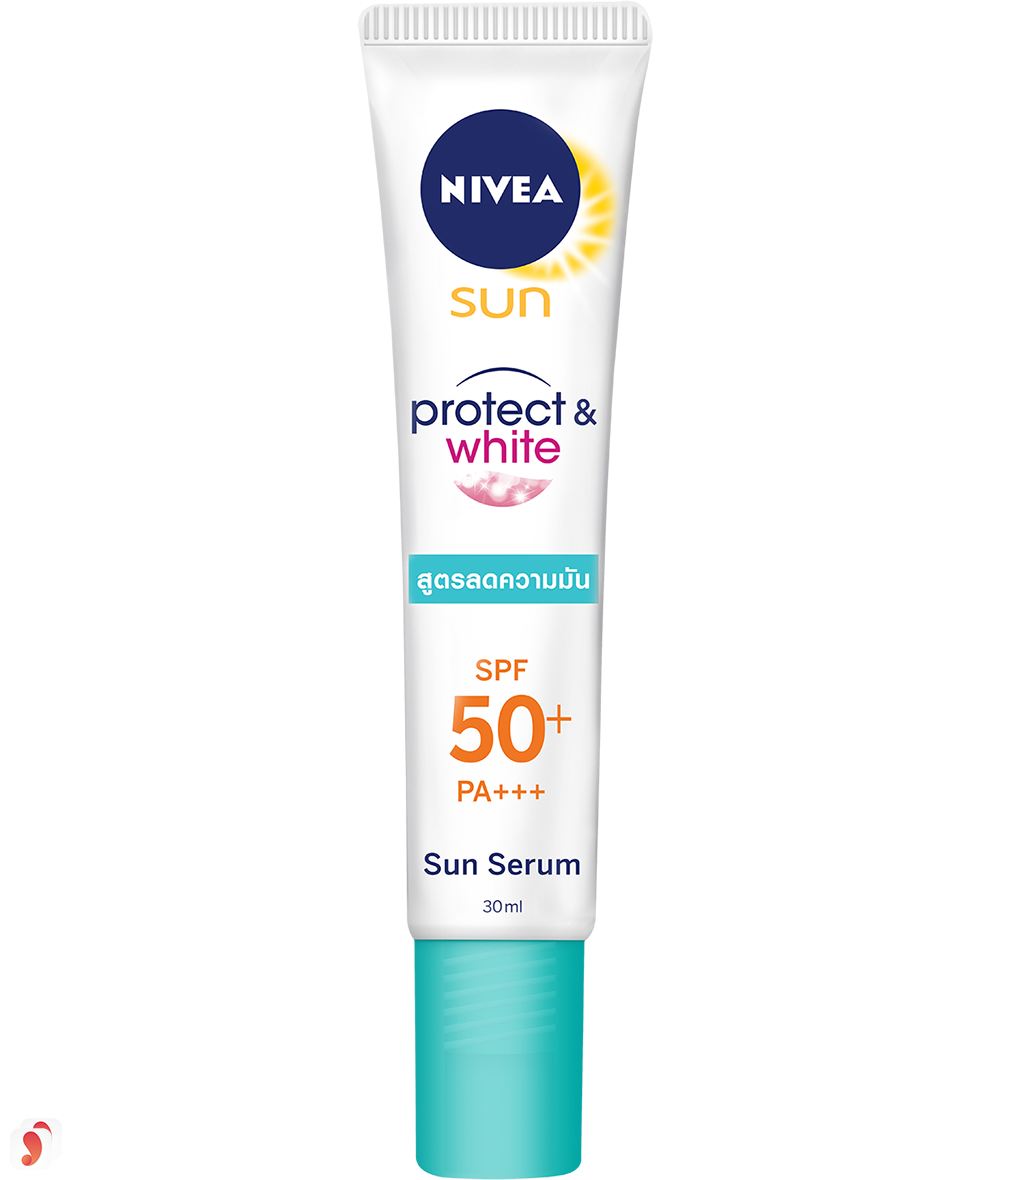 Kem chống nắng Nivea Sun Protect & White